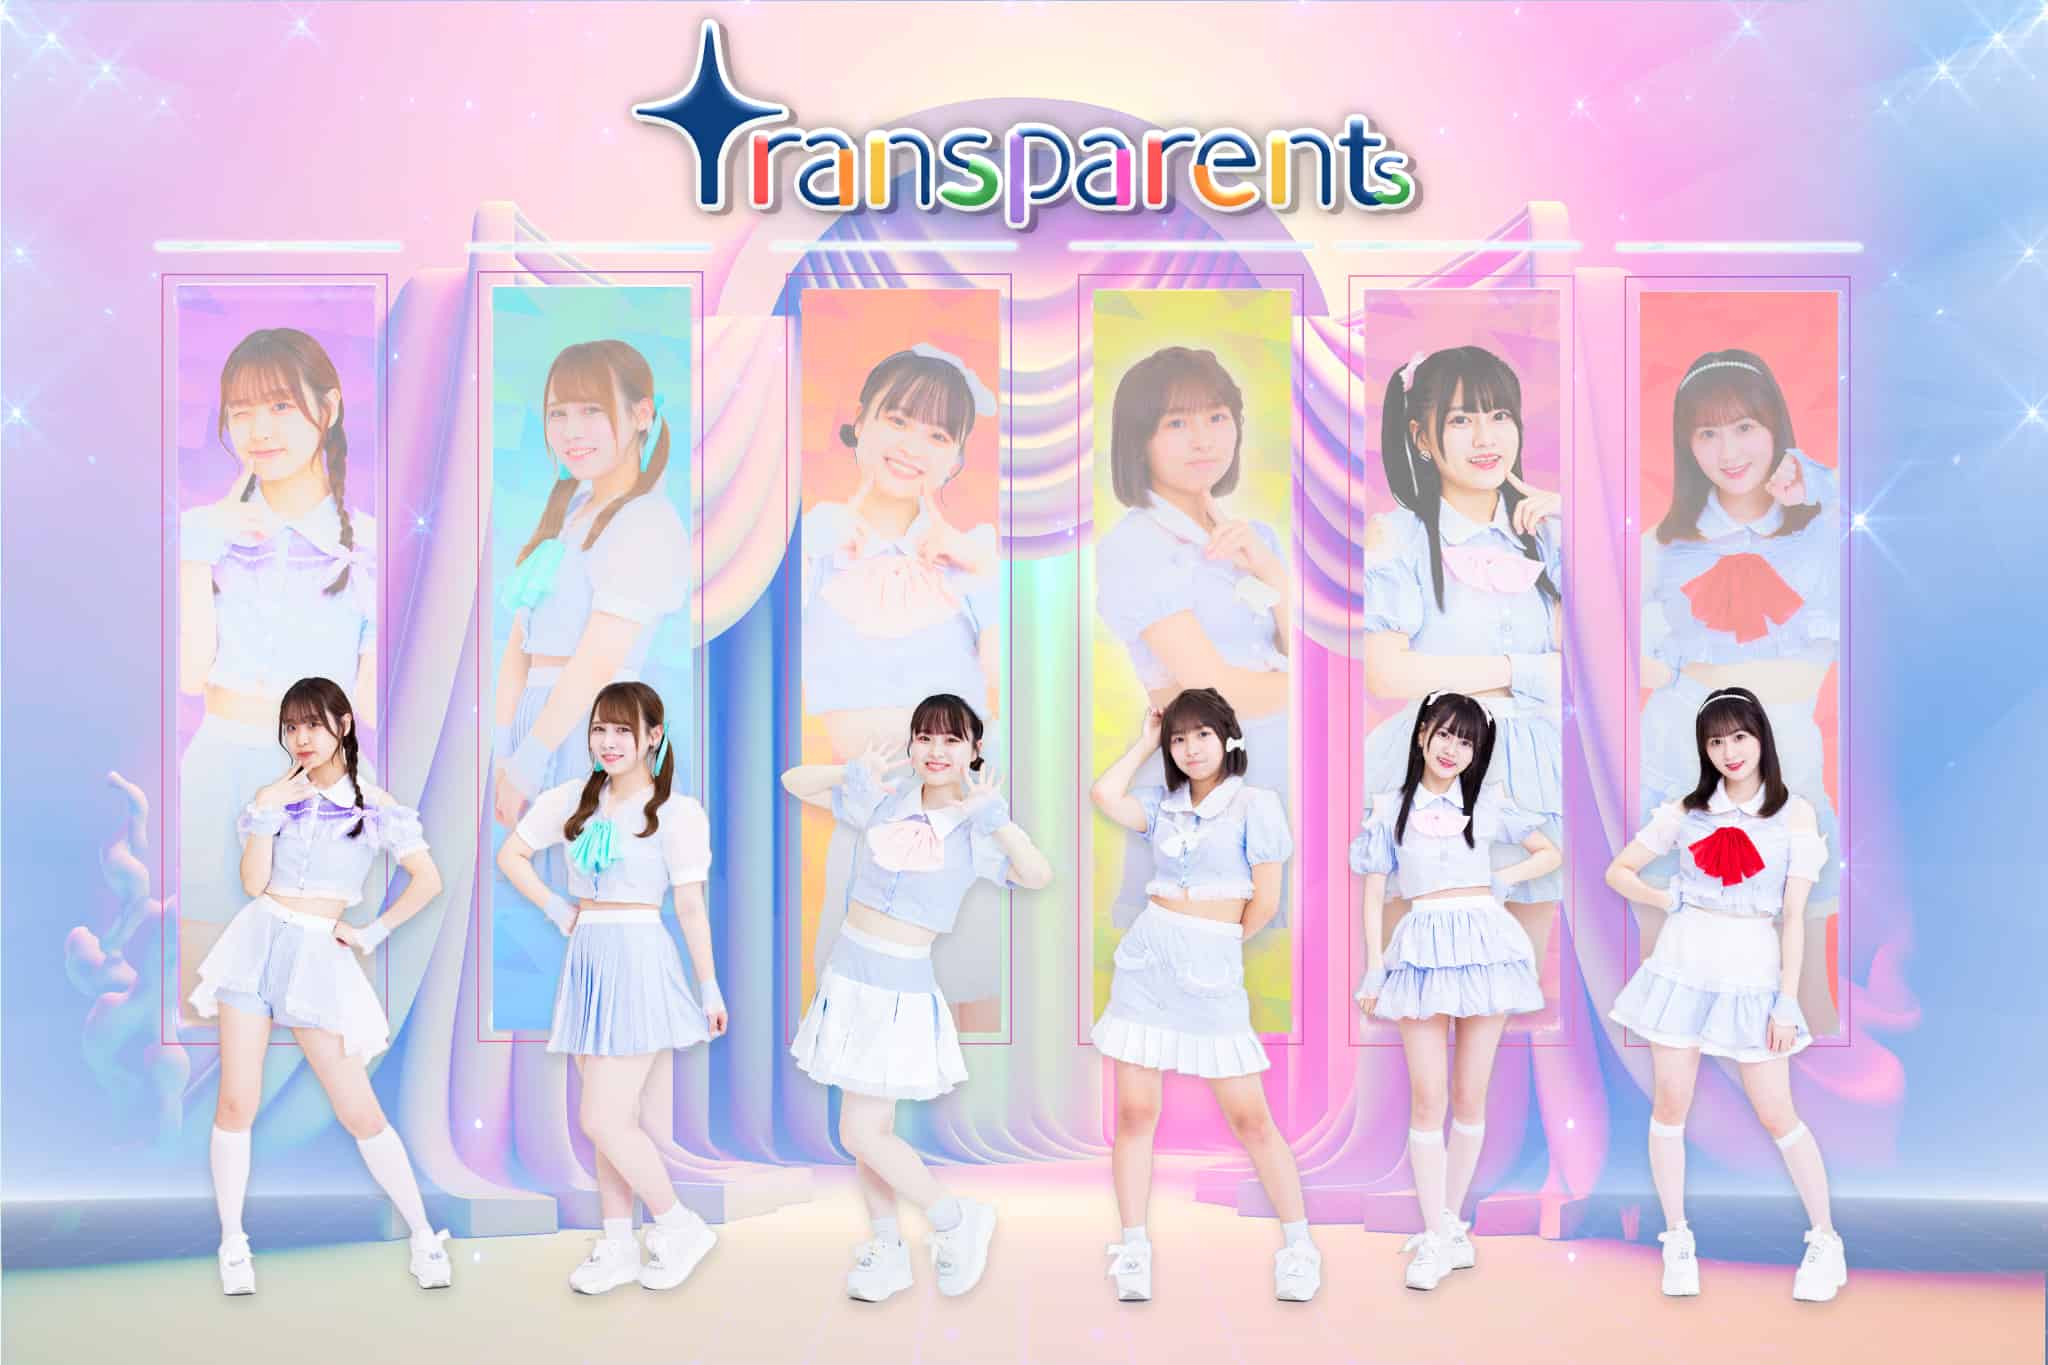 Transparents　(初)